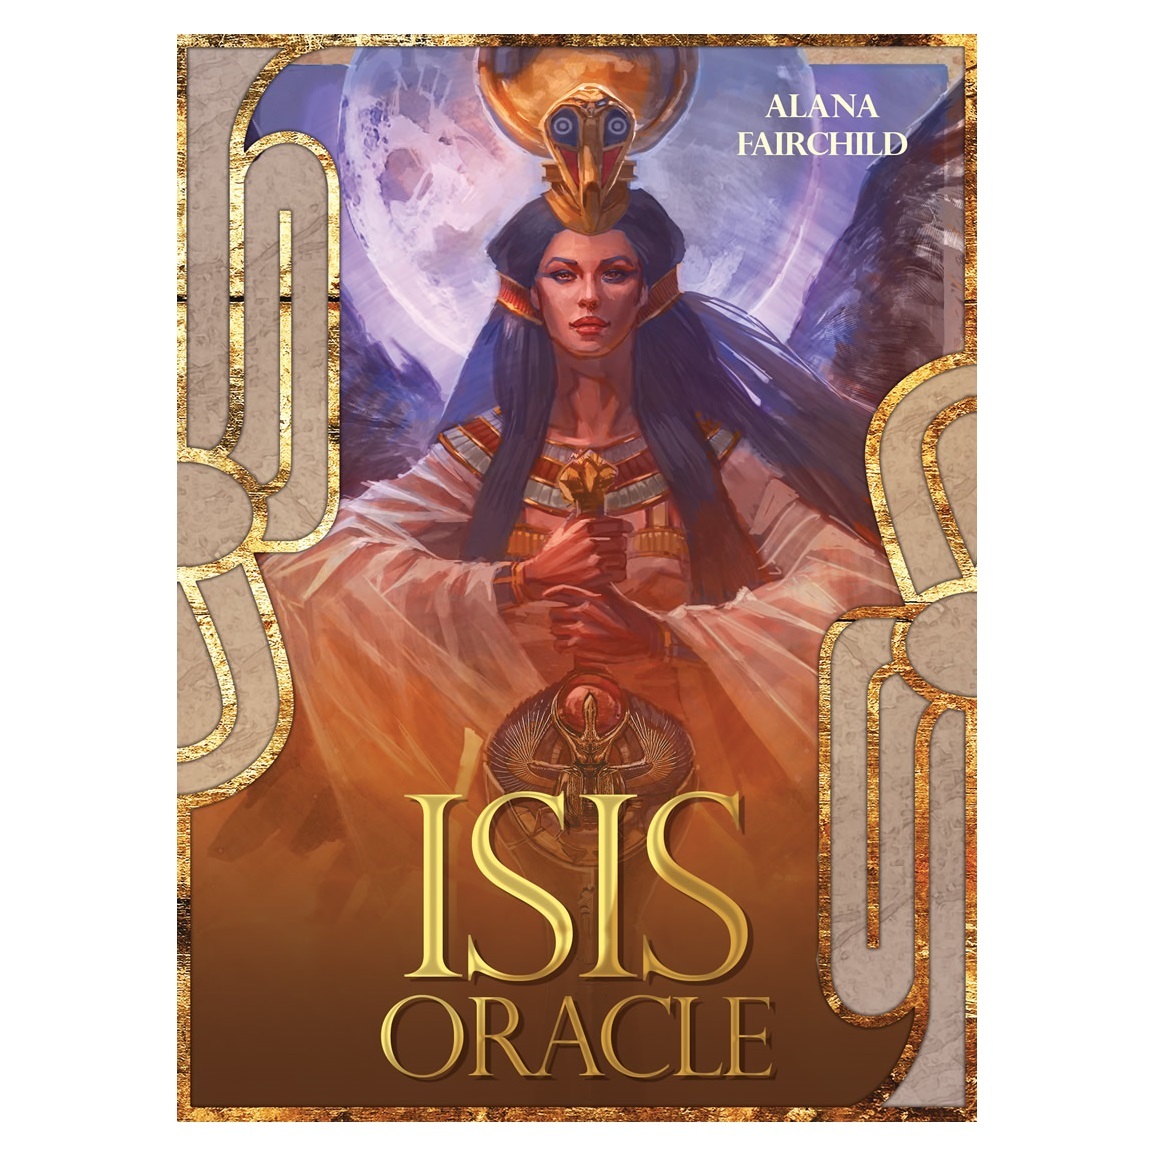 

Оракул Изиды (Isis Oracle)